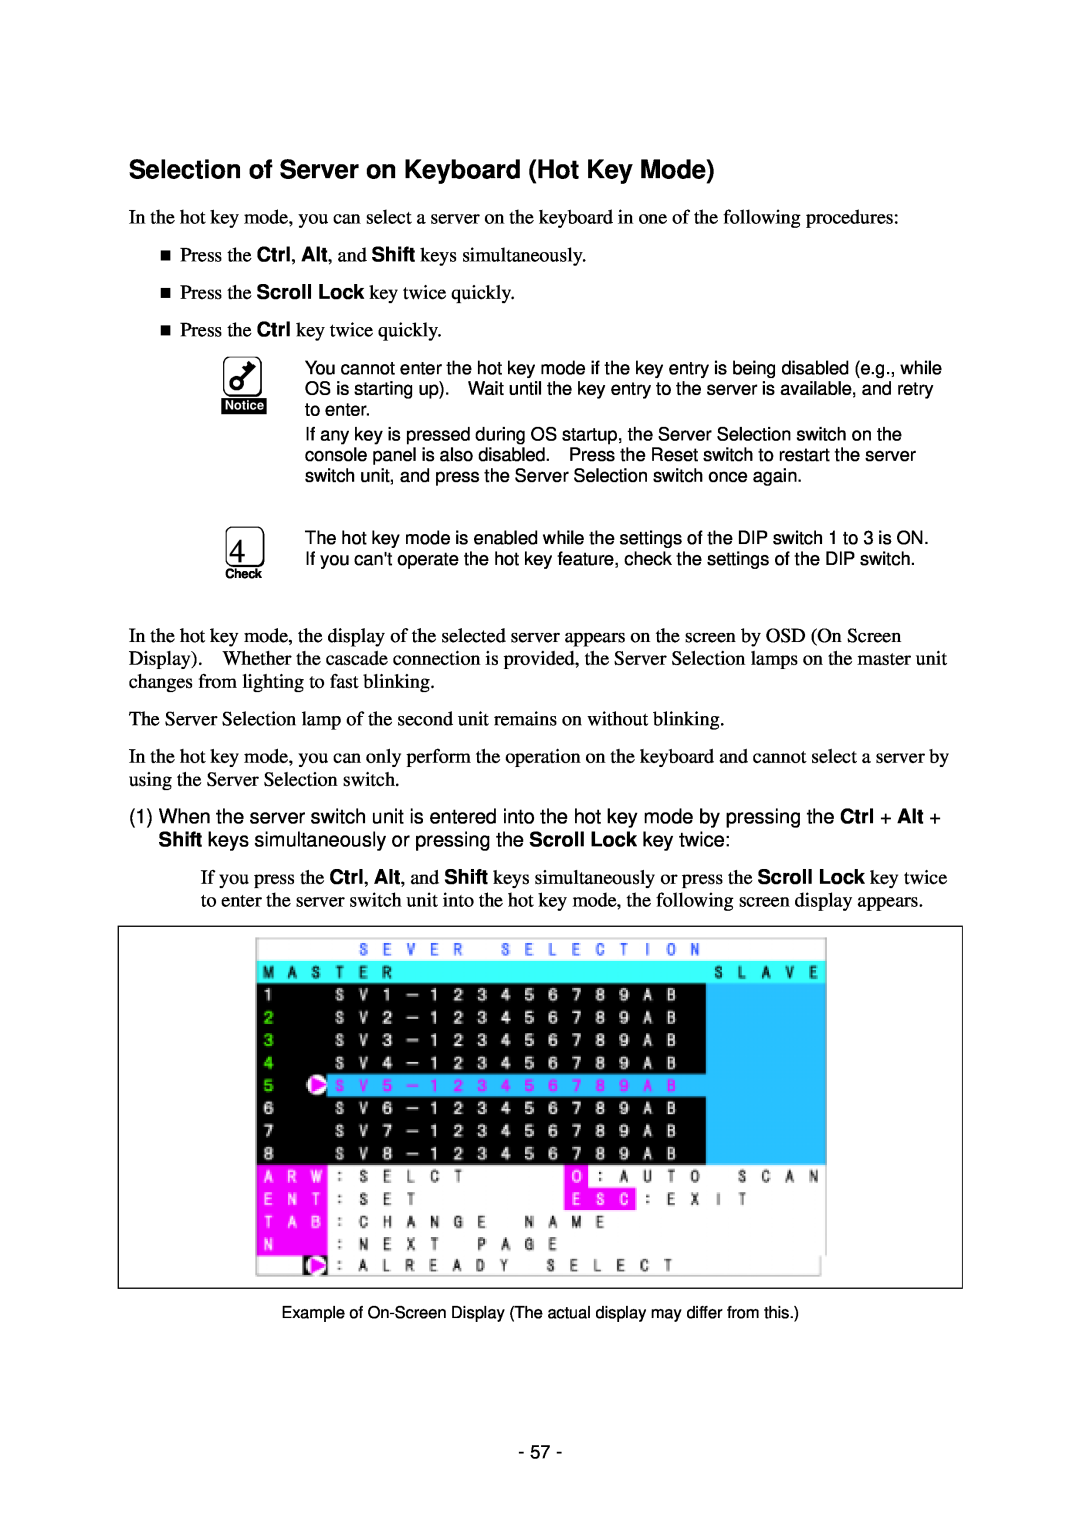 NEC N8191-09 manual Selection of Server on Keyboard Hot Key Mode 